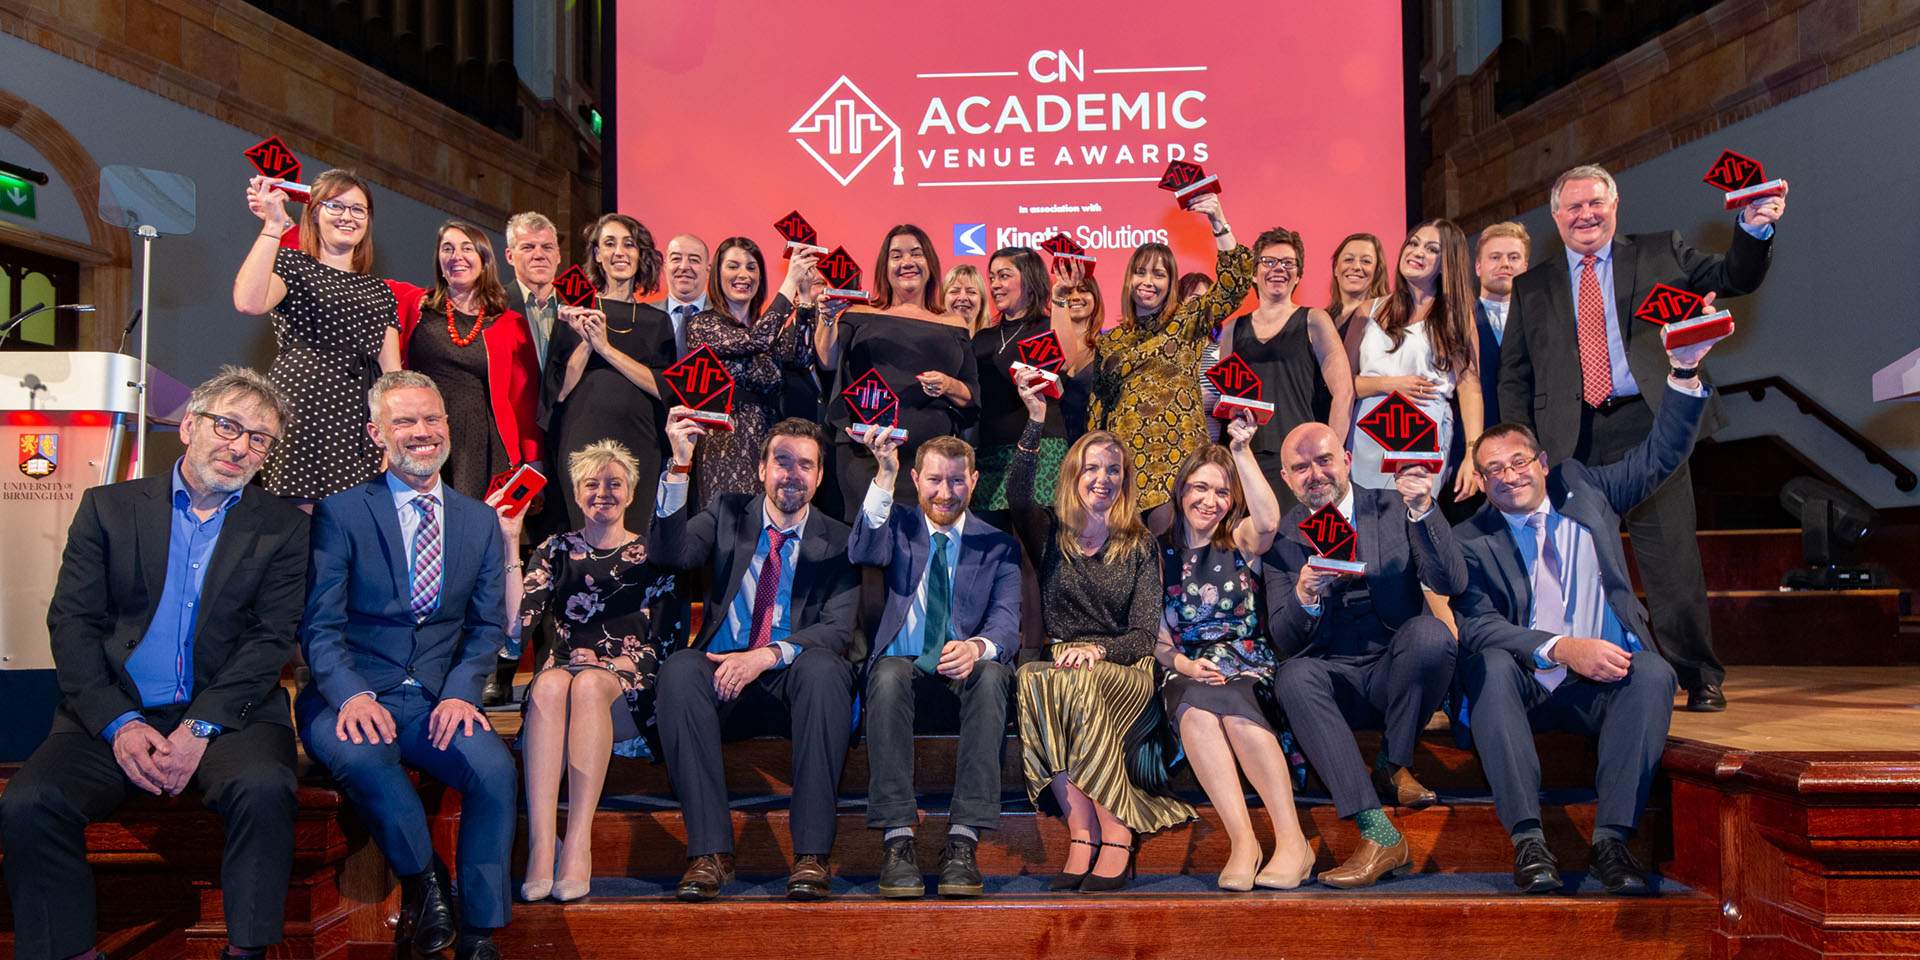 Academic Venue Awards 2018 - All Winners